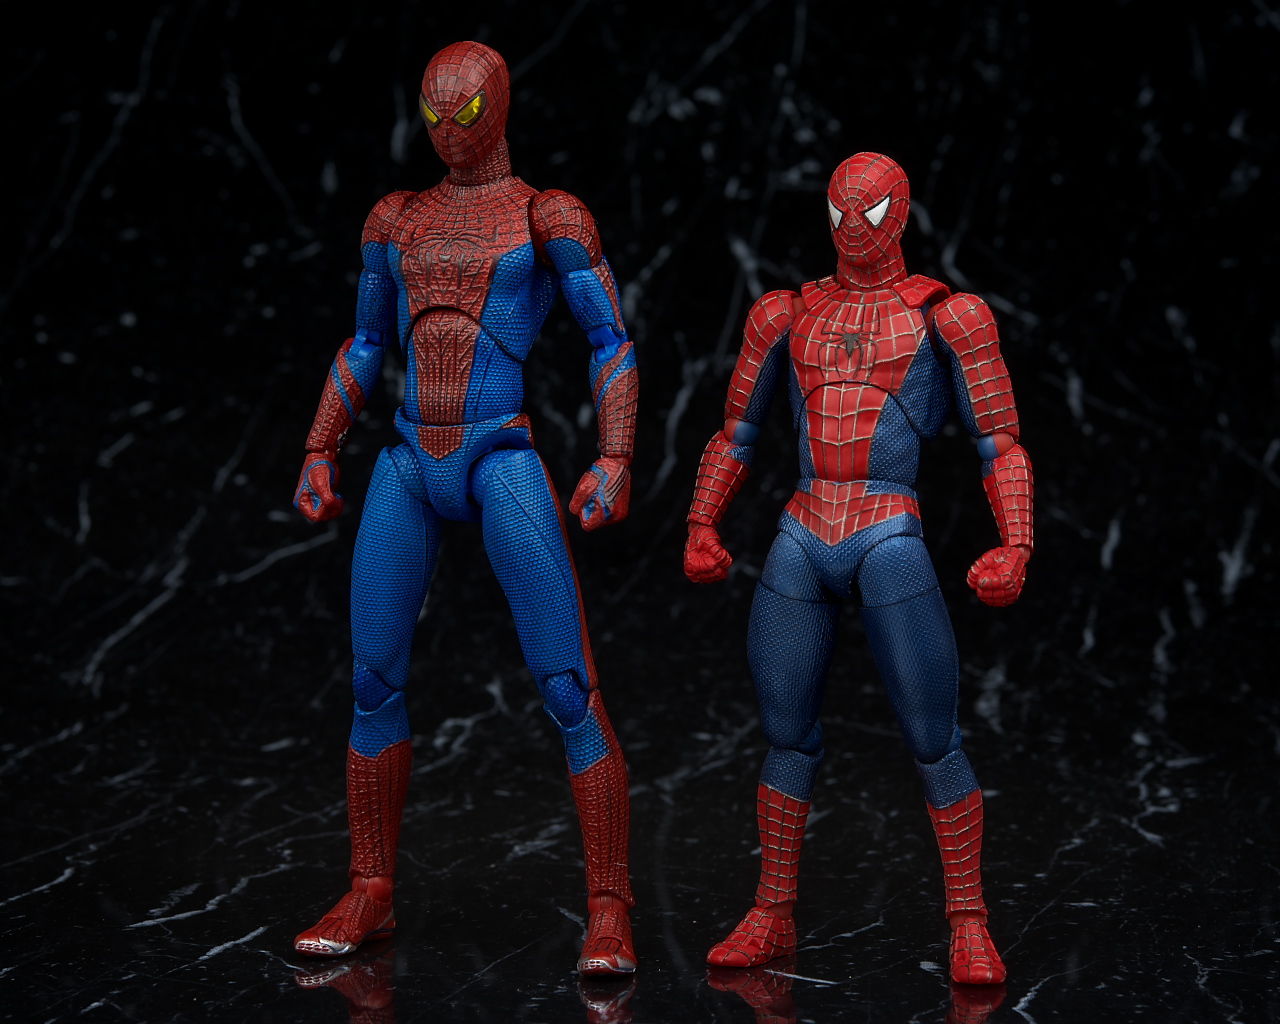 Toy full. MAFEX фигурки Spider man. MAFEX Spider man Black. Spider-man 3 игрушка Bandai. MAFEX 103 фигурка человека-паука.